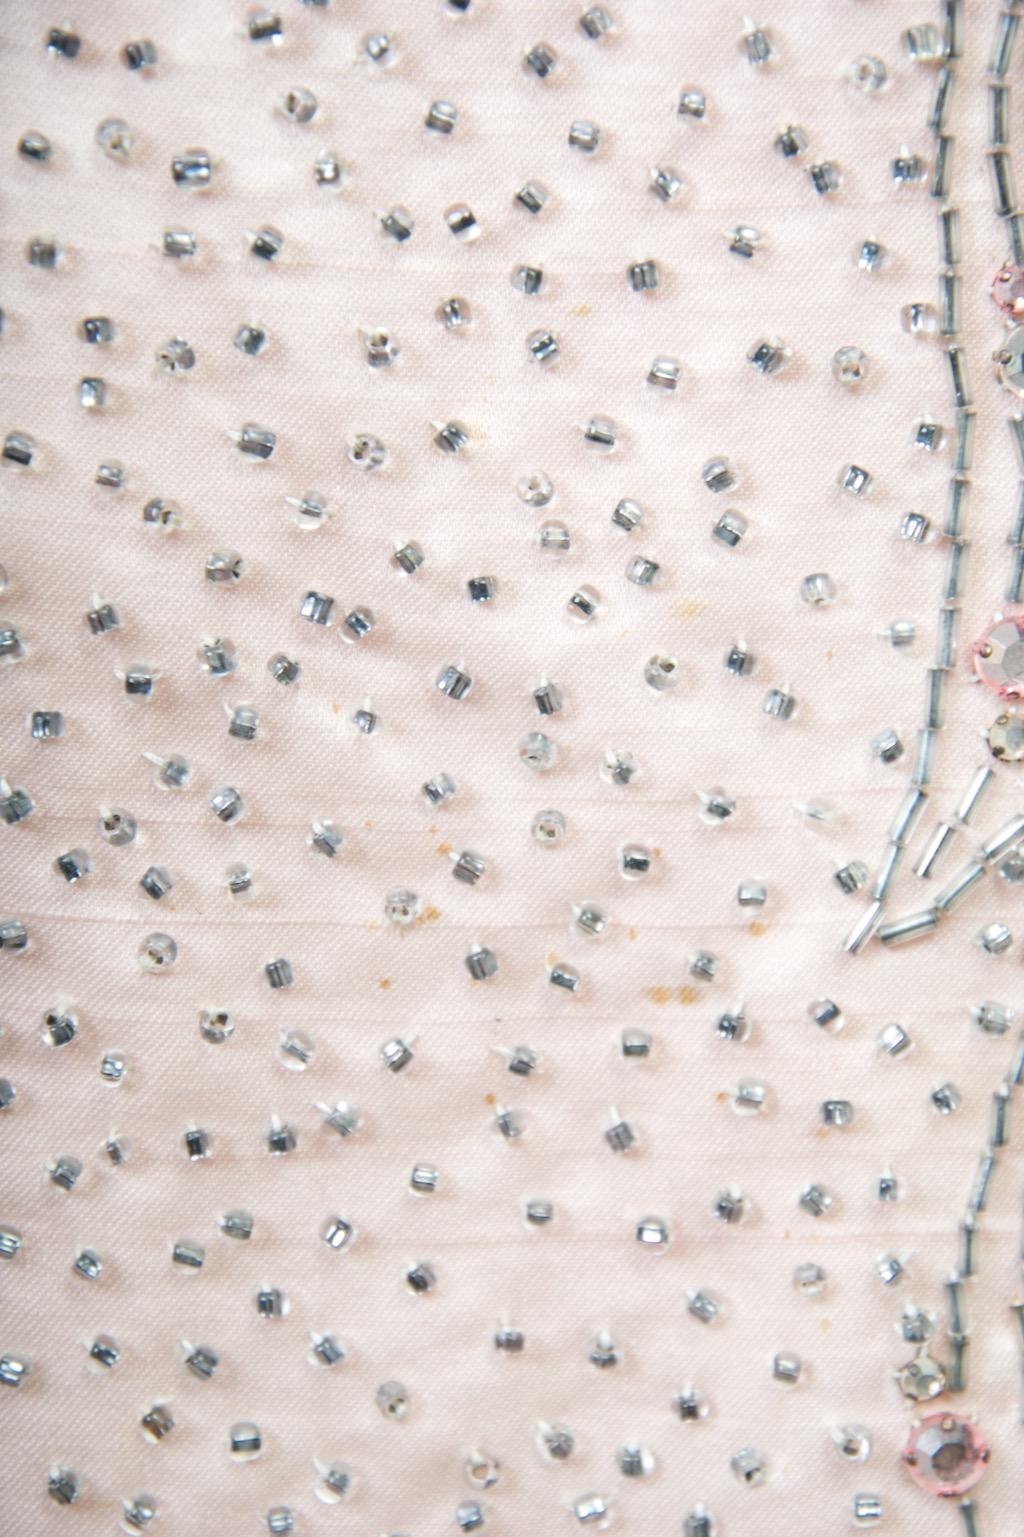 Malcom Starr 1960s Pink Beaded Dress For Sale 6